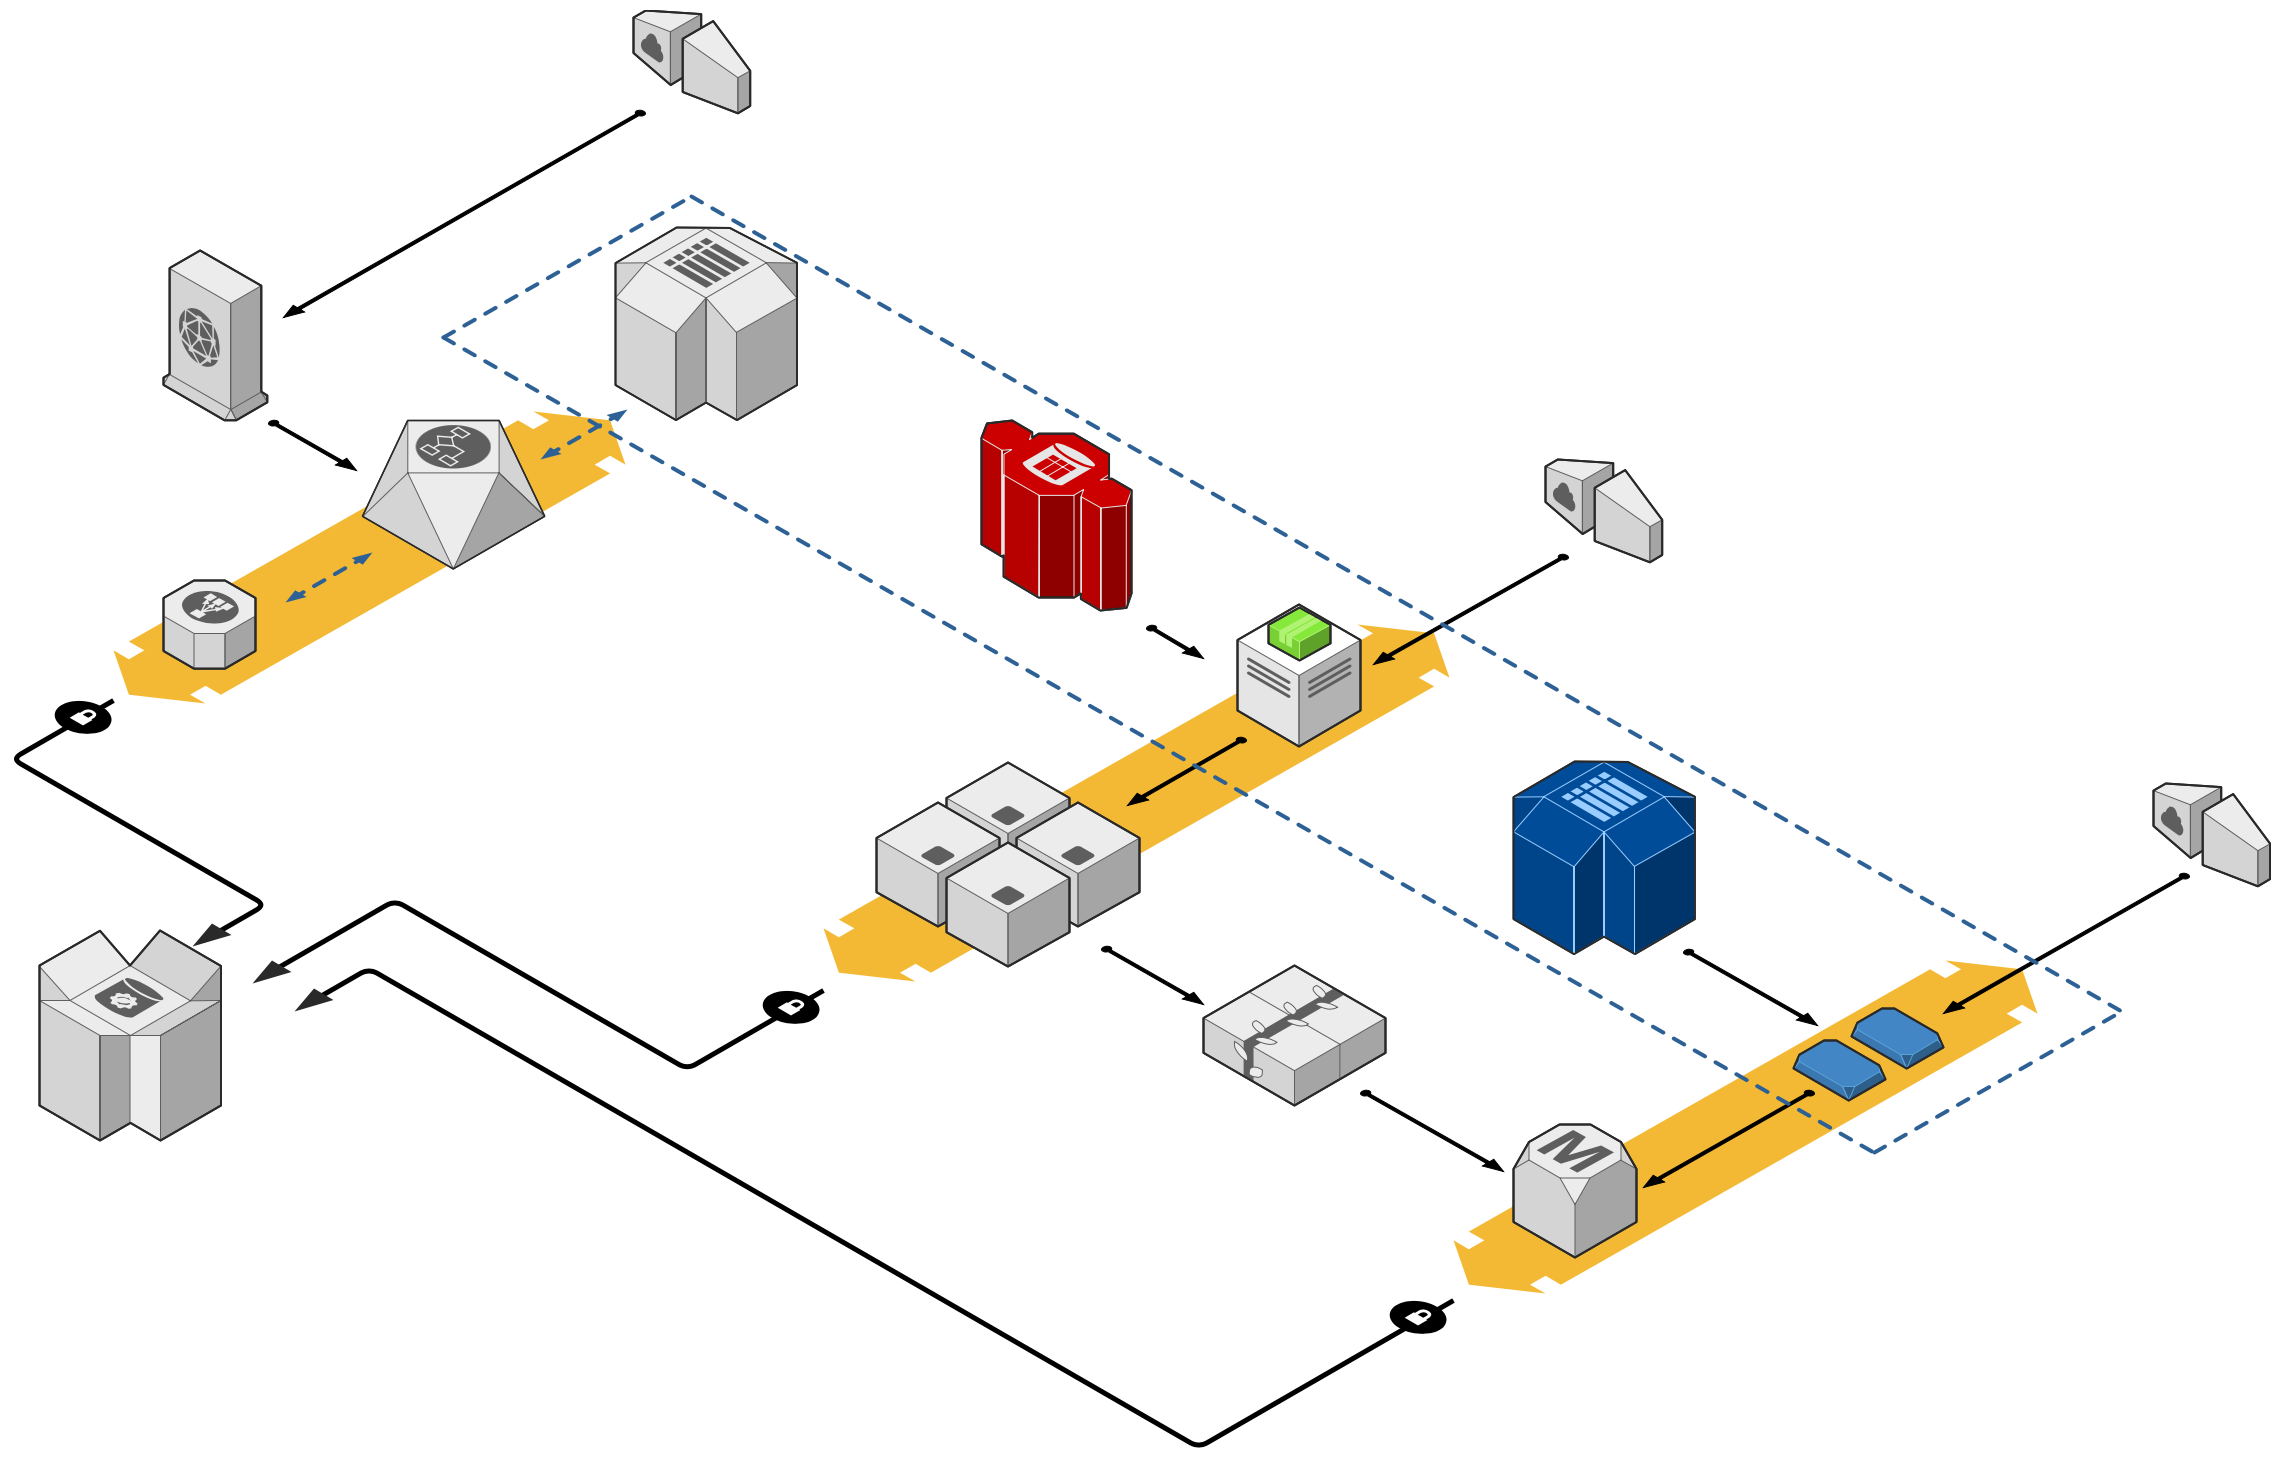 A basic AWS diagram in 3D